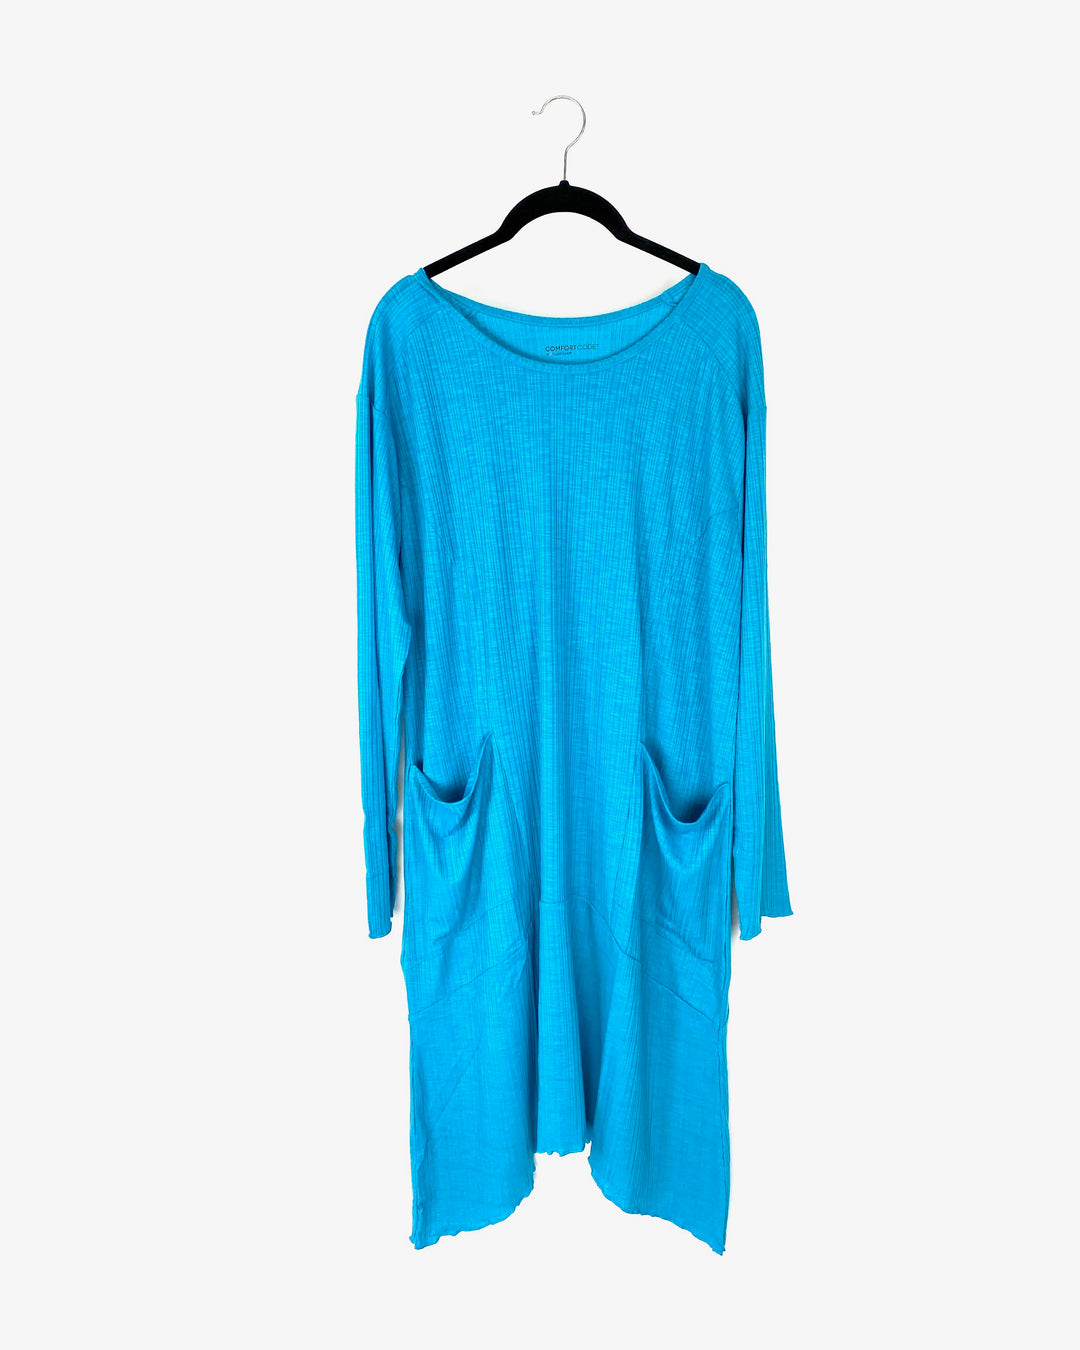 Bright Blue Ribbed Dress - Small and Medium